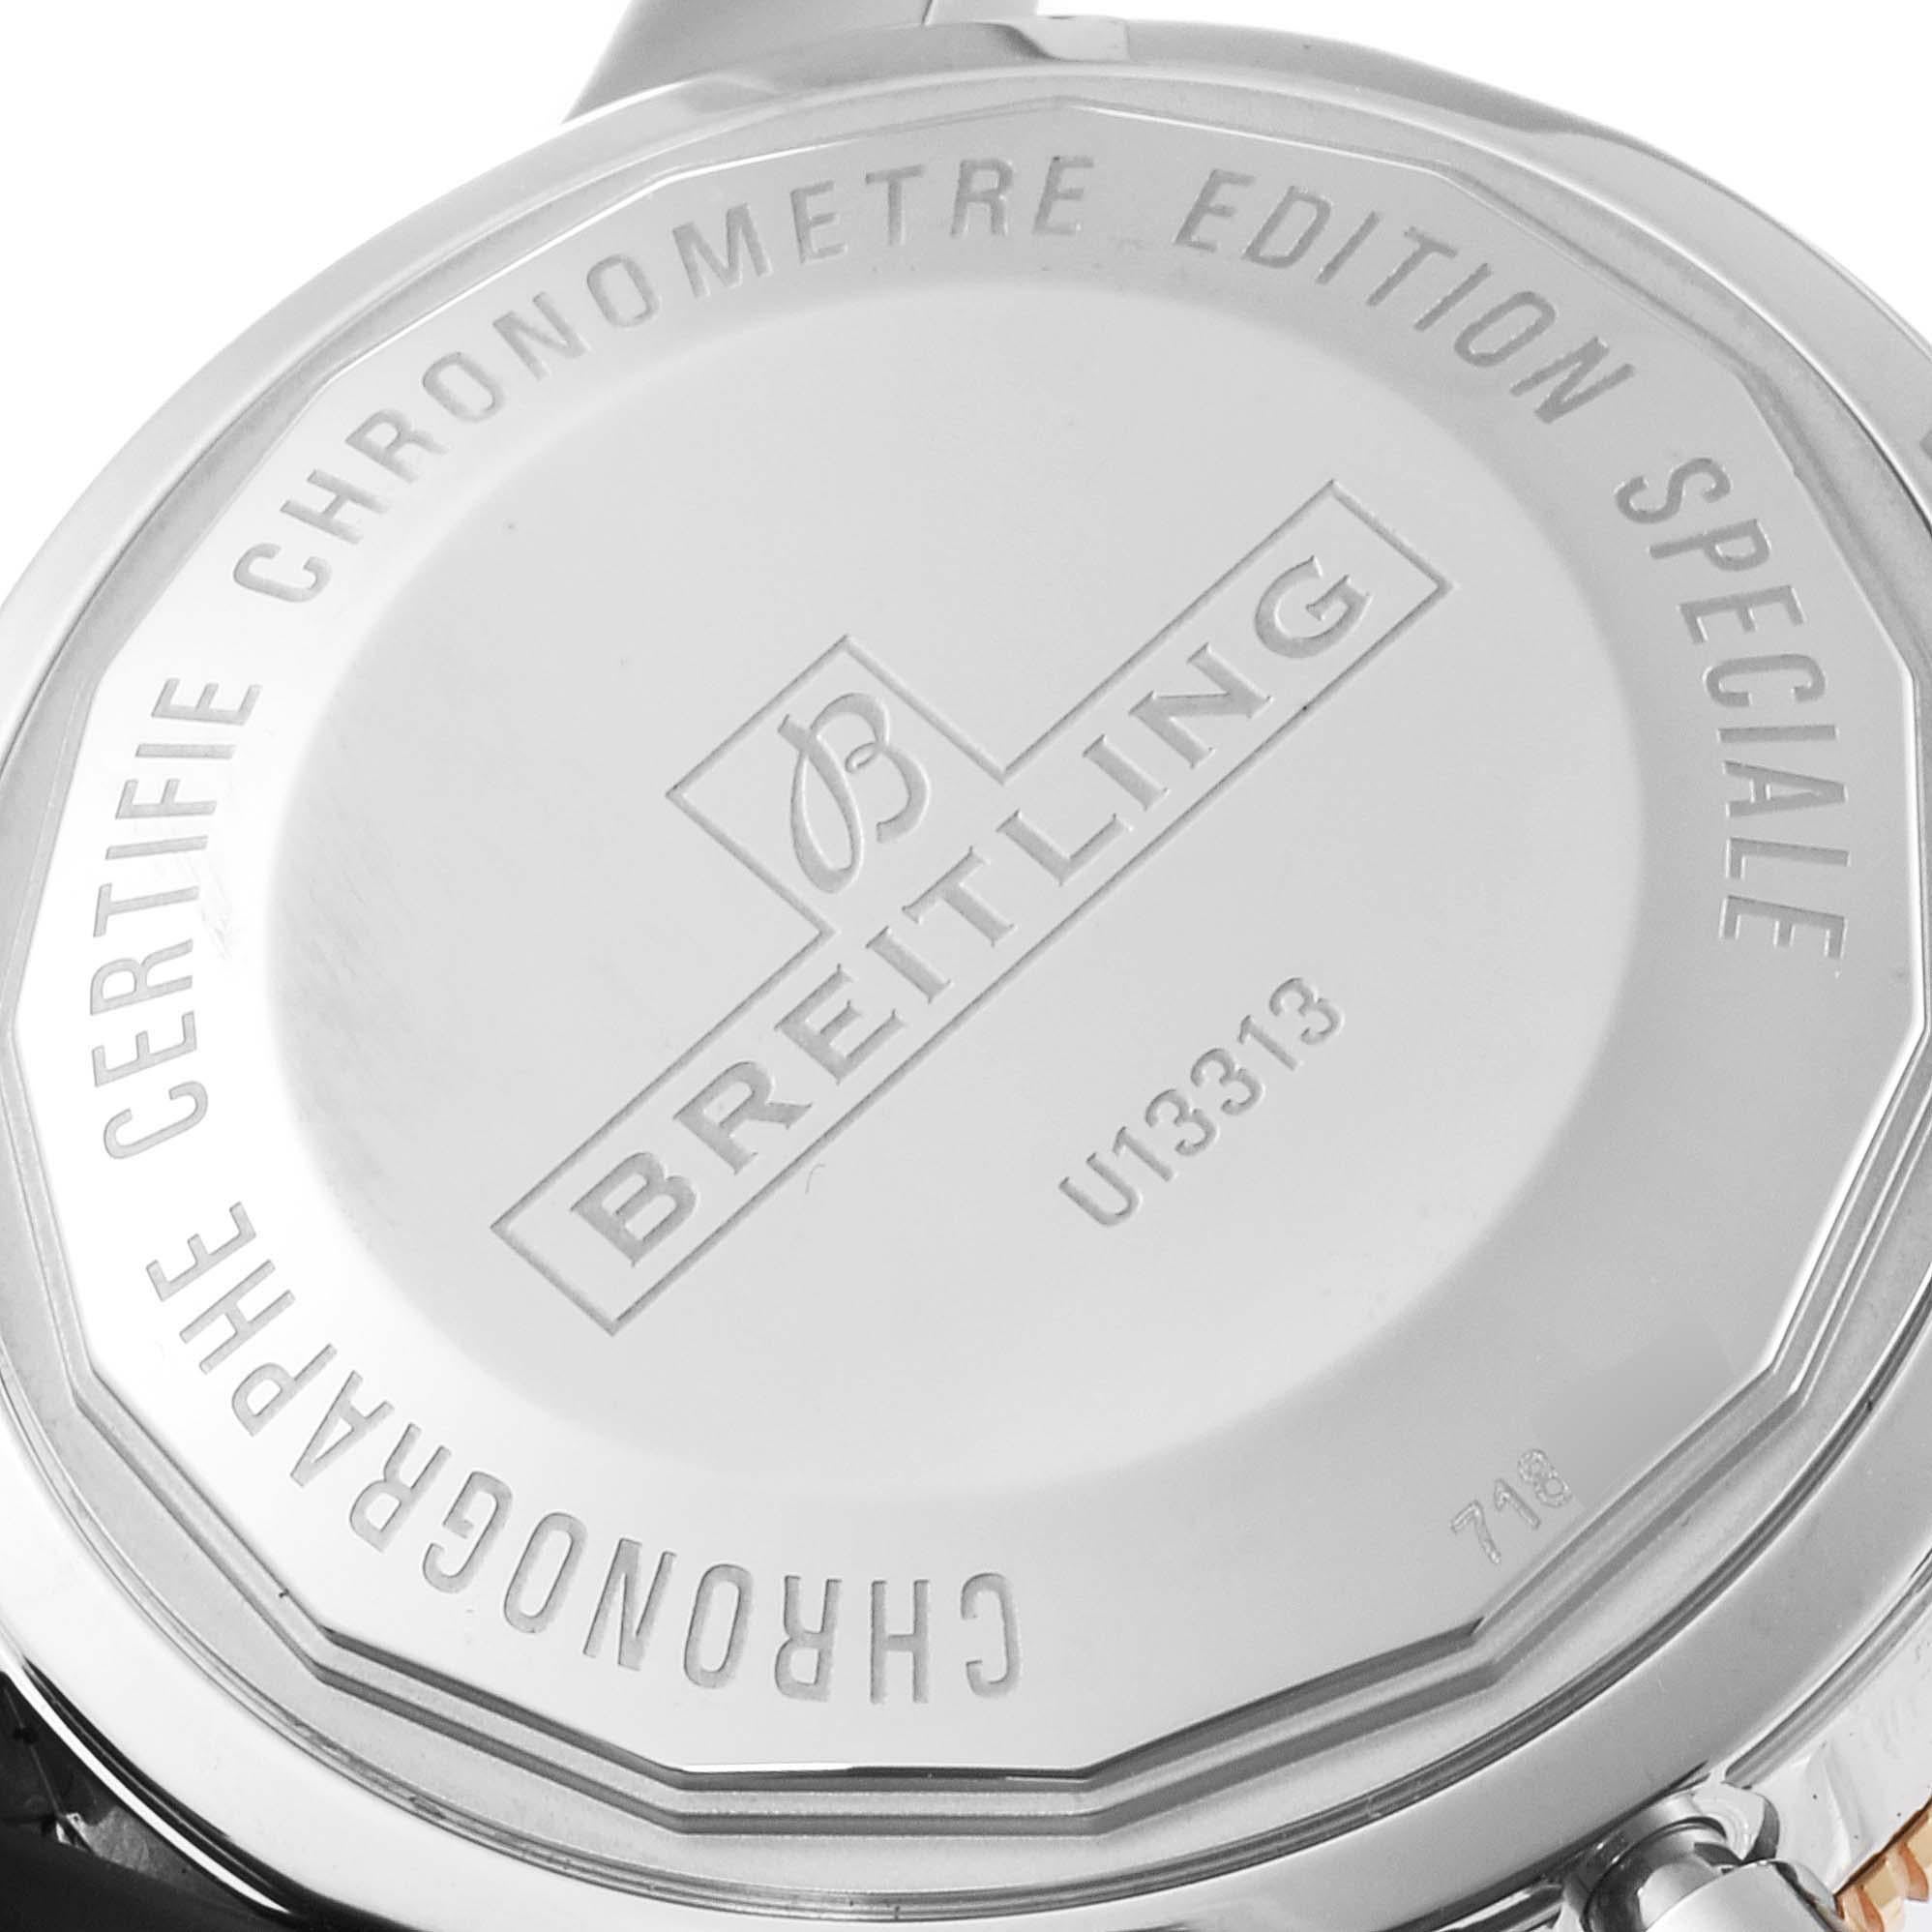 Breitling Superocean Heritage II Steel Rose Gold Watch U13313 Box Card For Sale 2